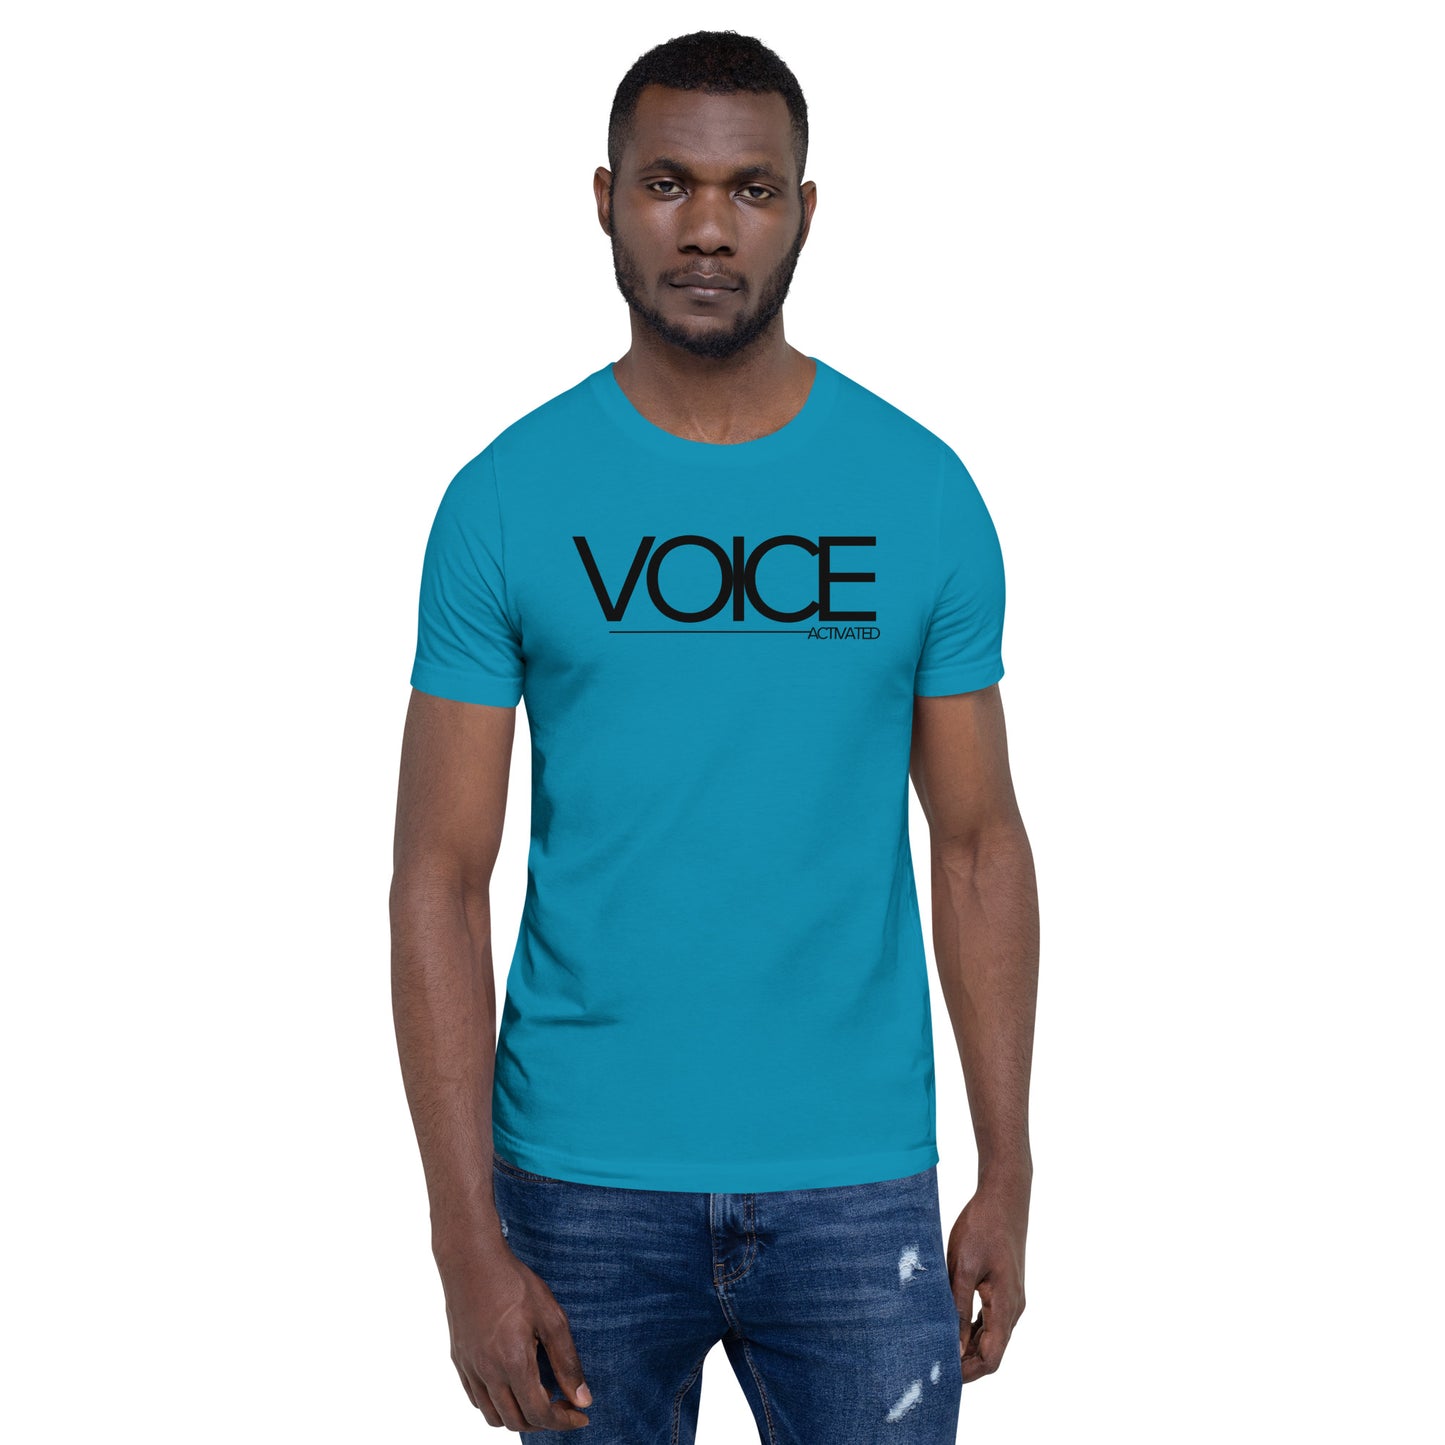 Voice Activated - Unisex t-shirt